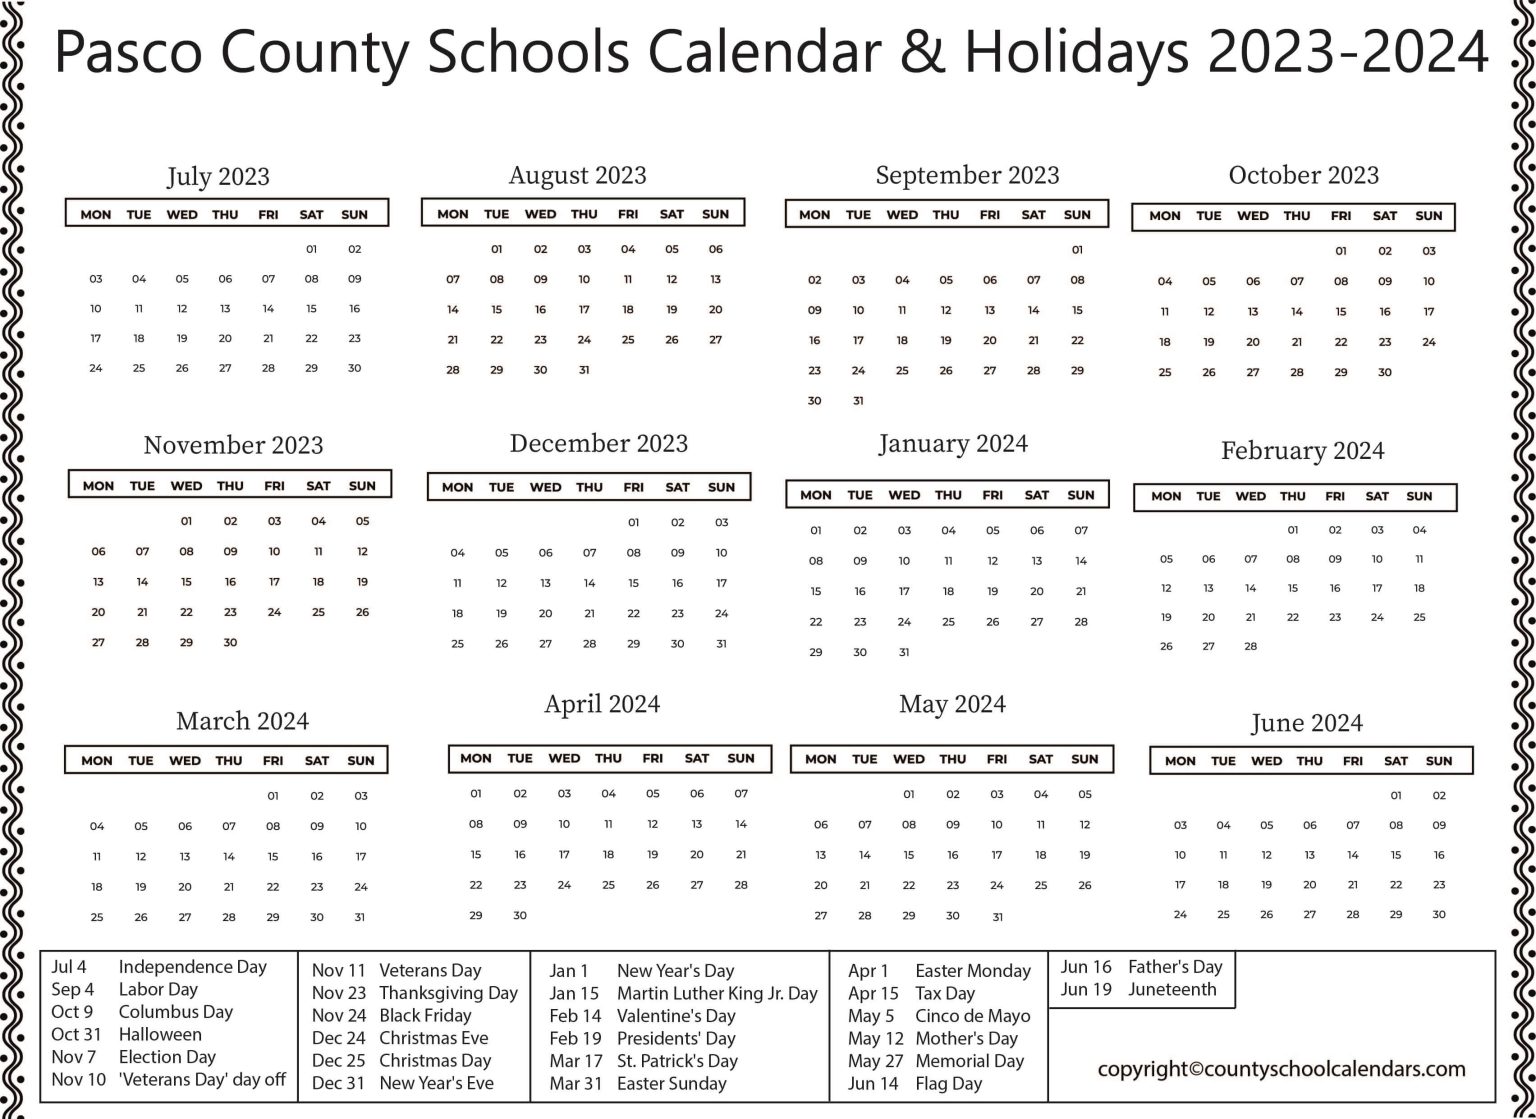 Pasco County Schools Calendar & Holidays 2023-2024